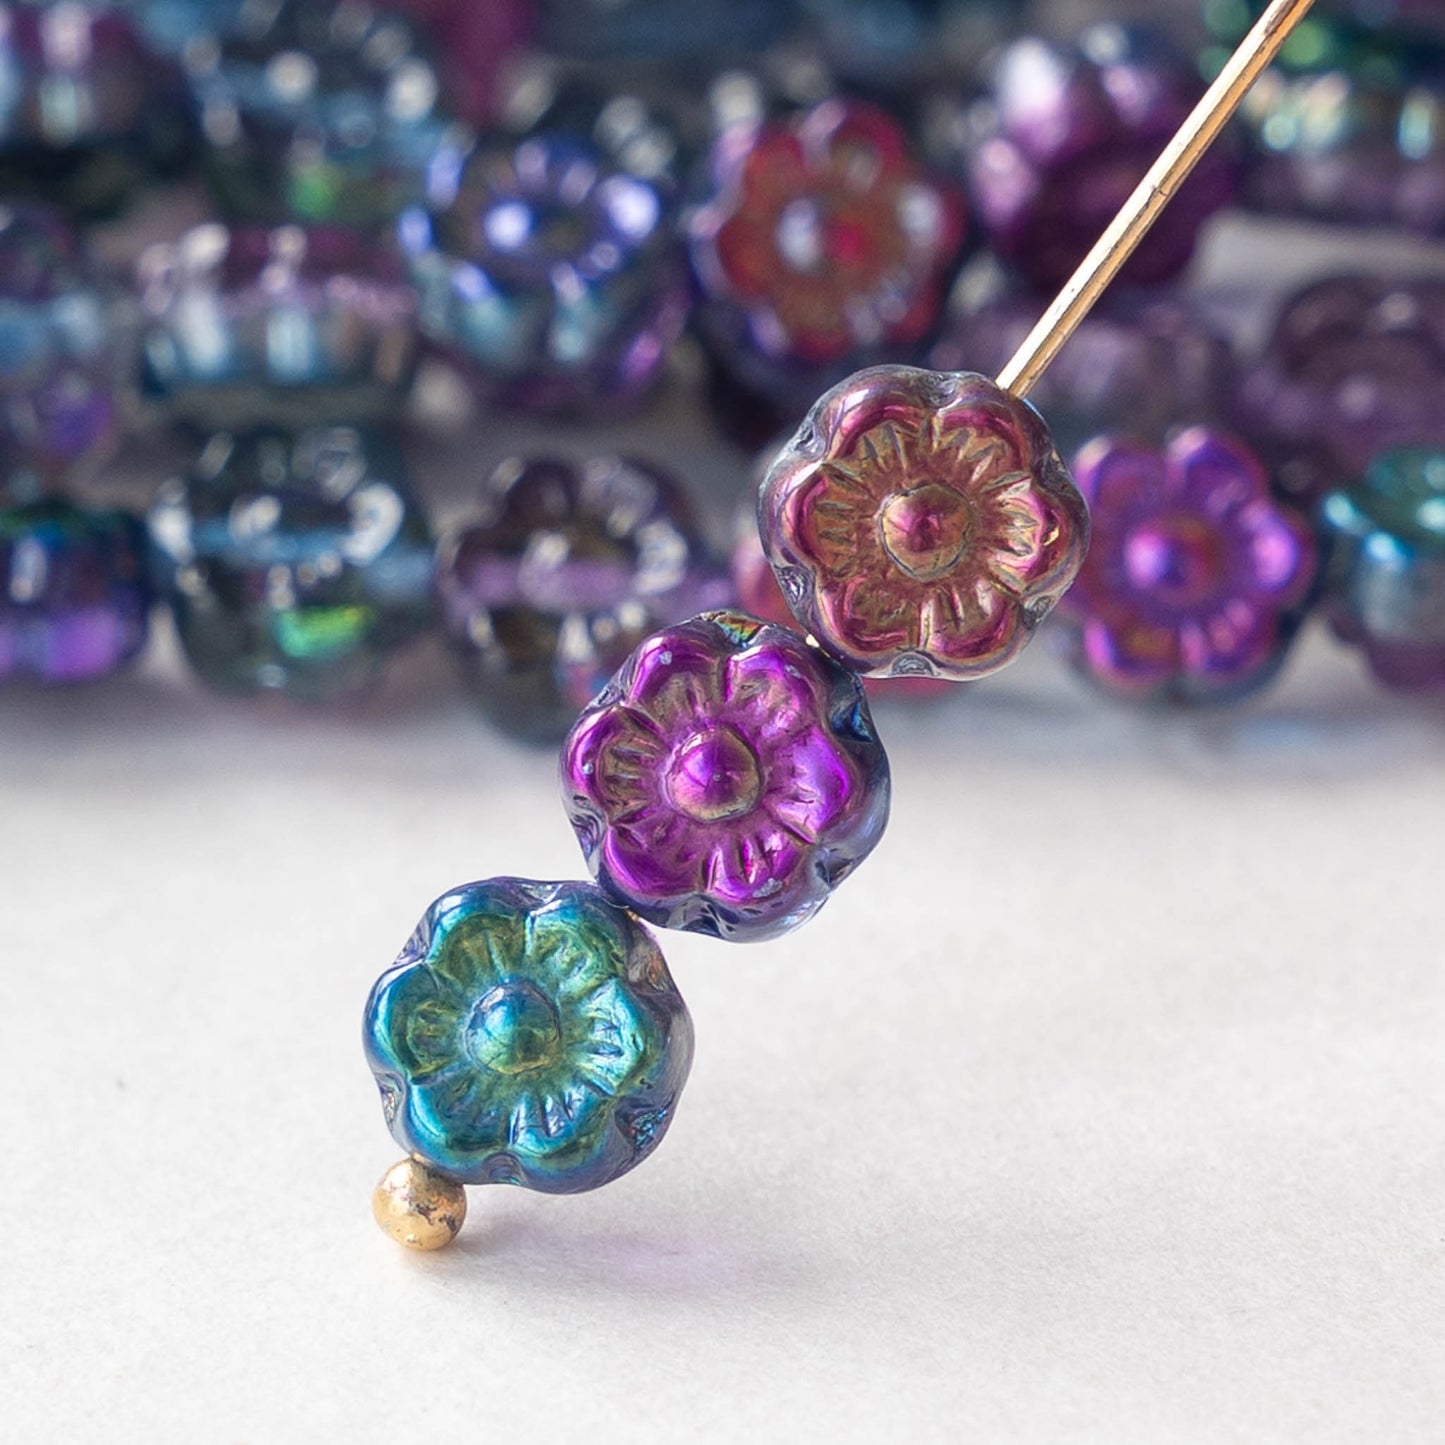 6mm Glass Flower Beads - Blue Violet Luster - 30 beads